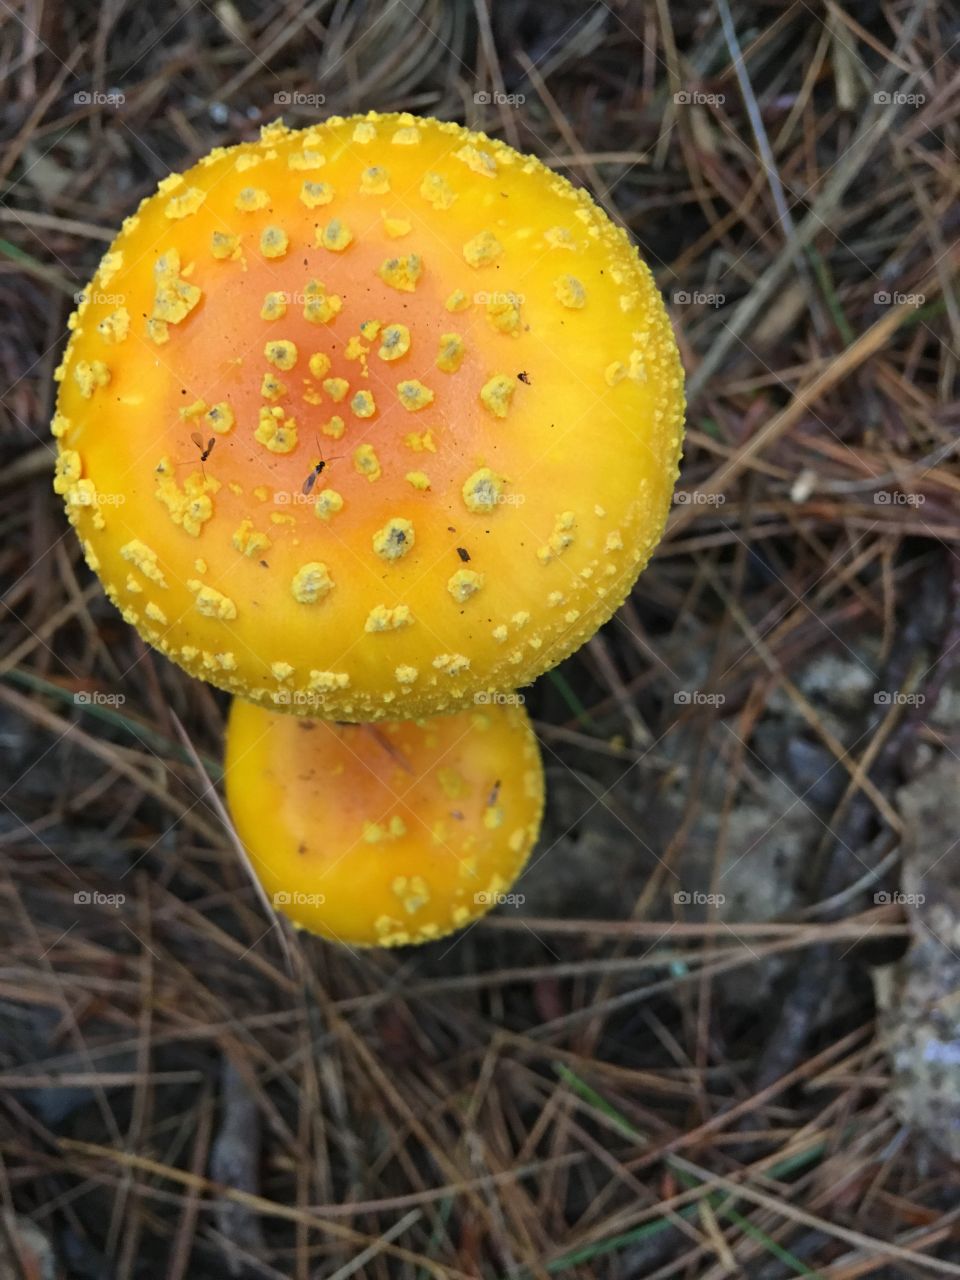 So yellow mushrooms 